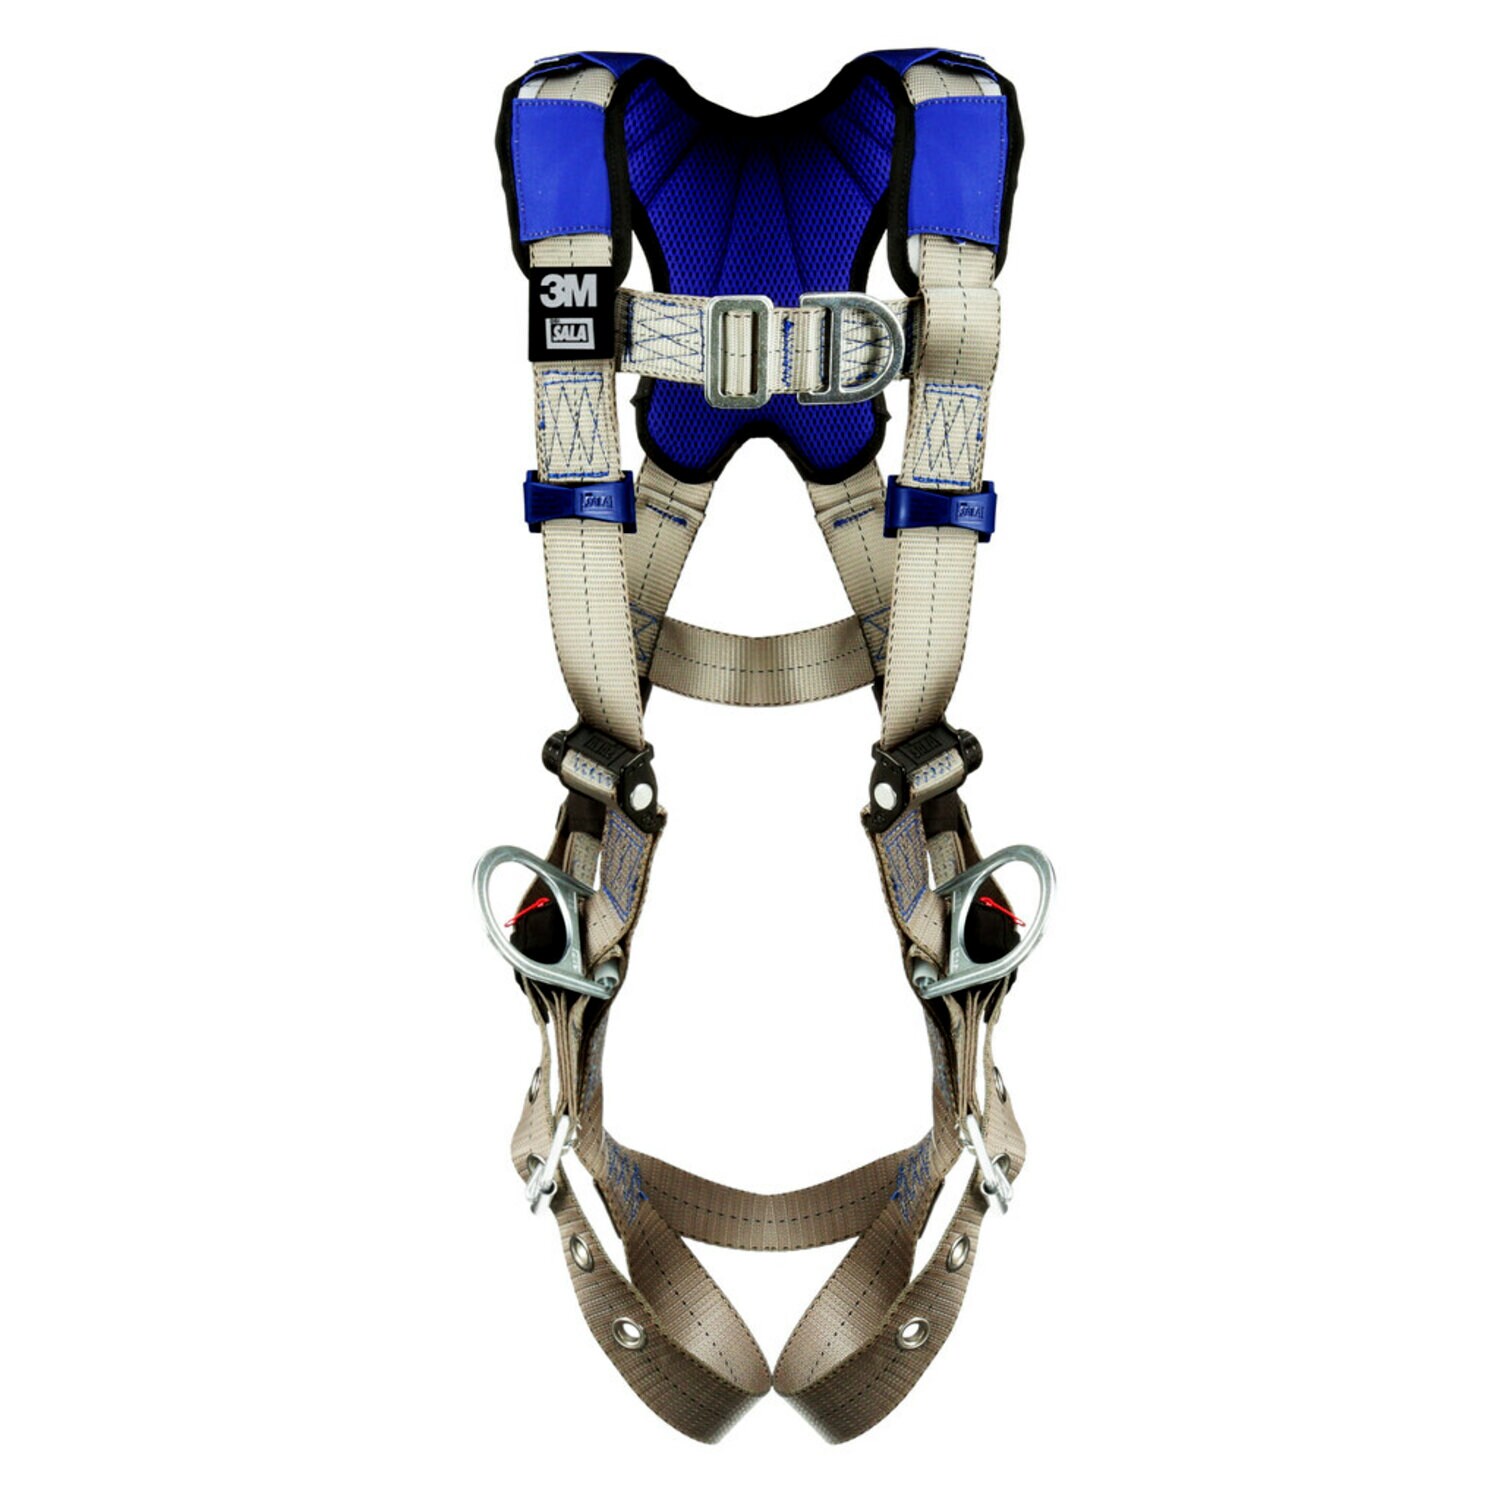 7012817460 - 3M DBI-SALA ExoFit X100 Comfort Vest Climbing/Positioning Safety Harness 1401015, Small